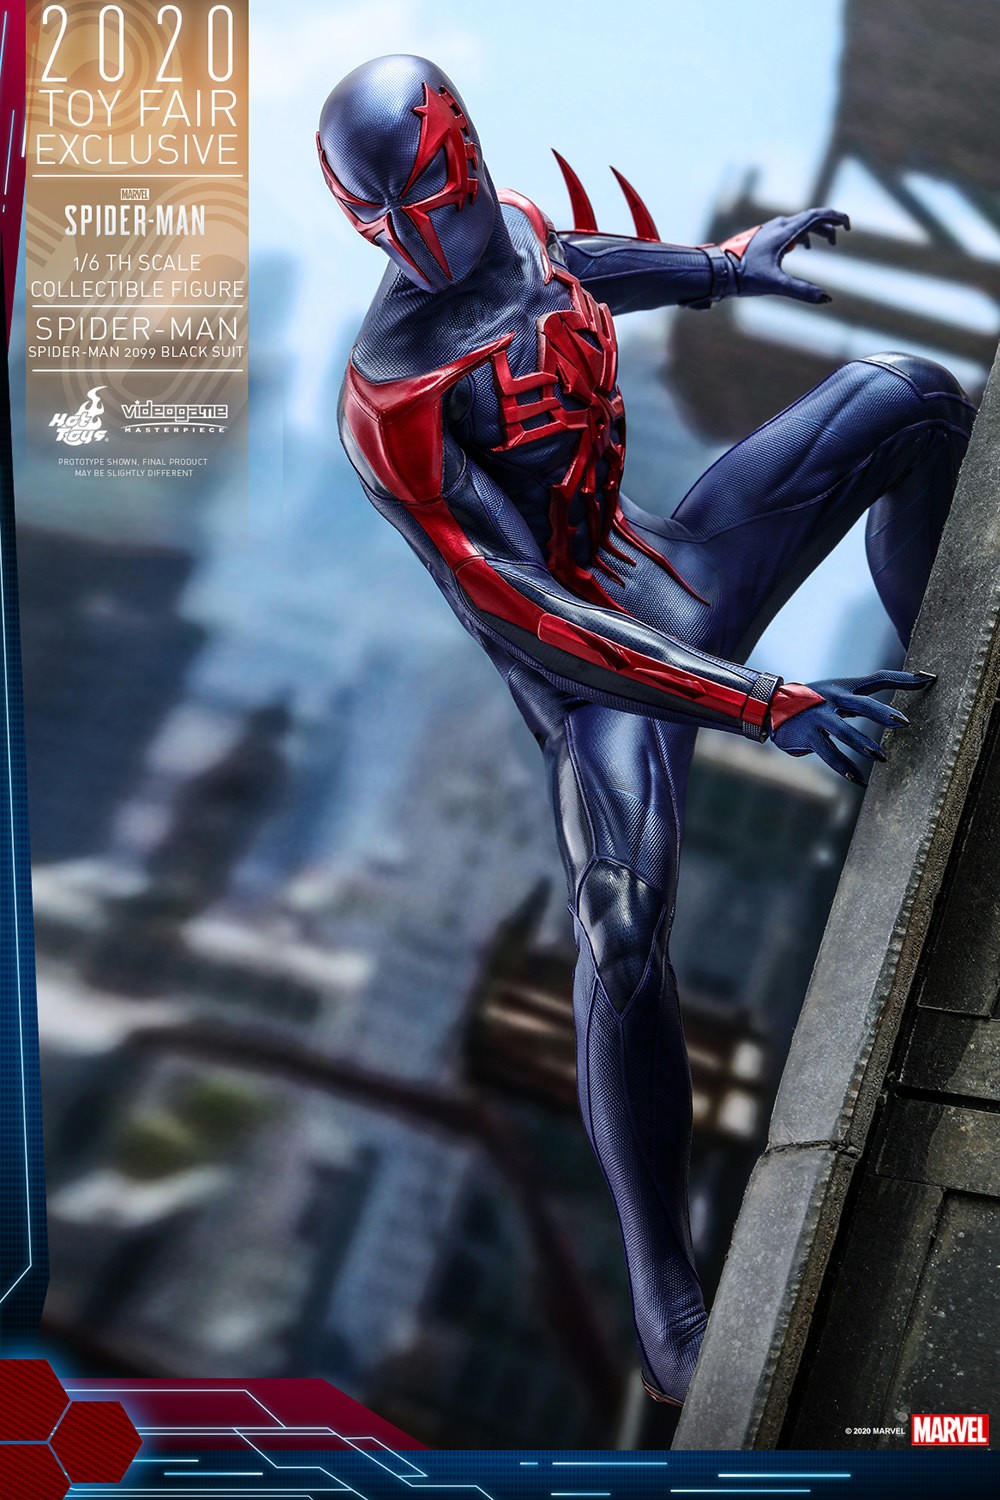 Spider-Man (Spider-Man 2099 Black Suit) Exclusive Edition (Prototype Shown) View 5